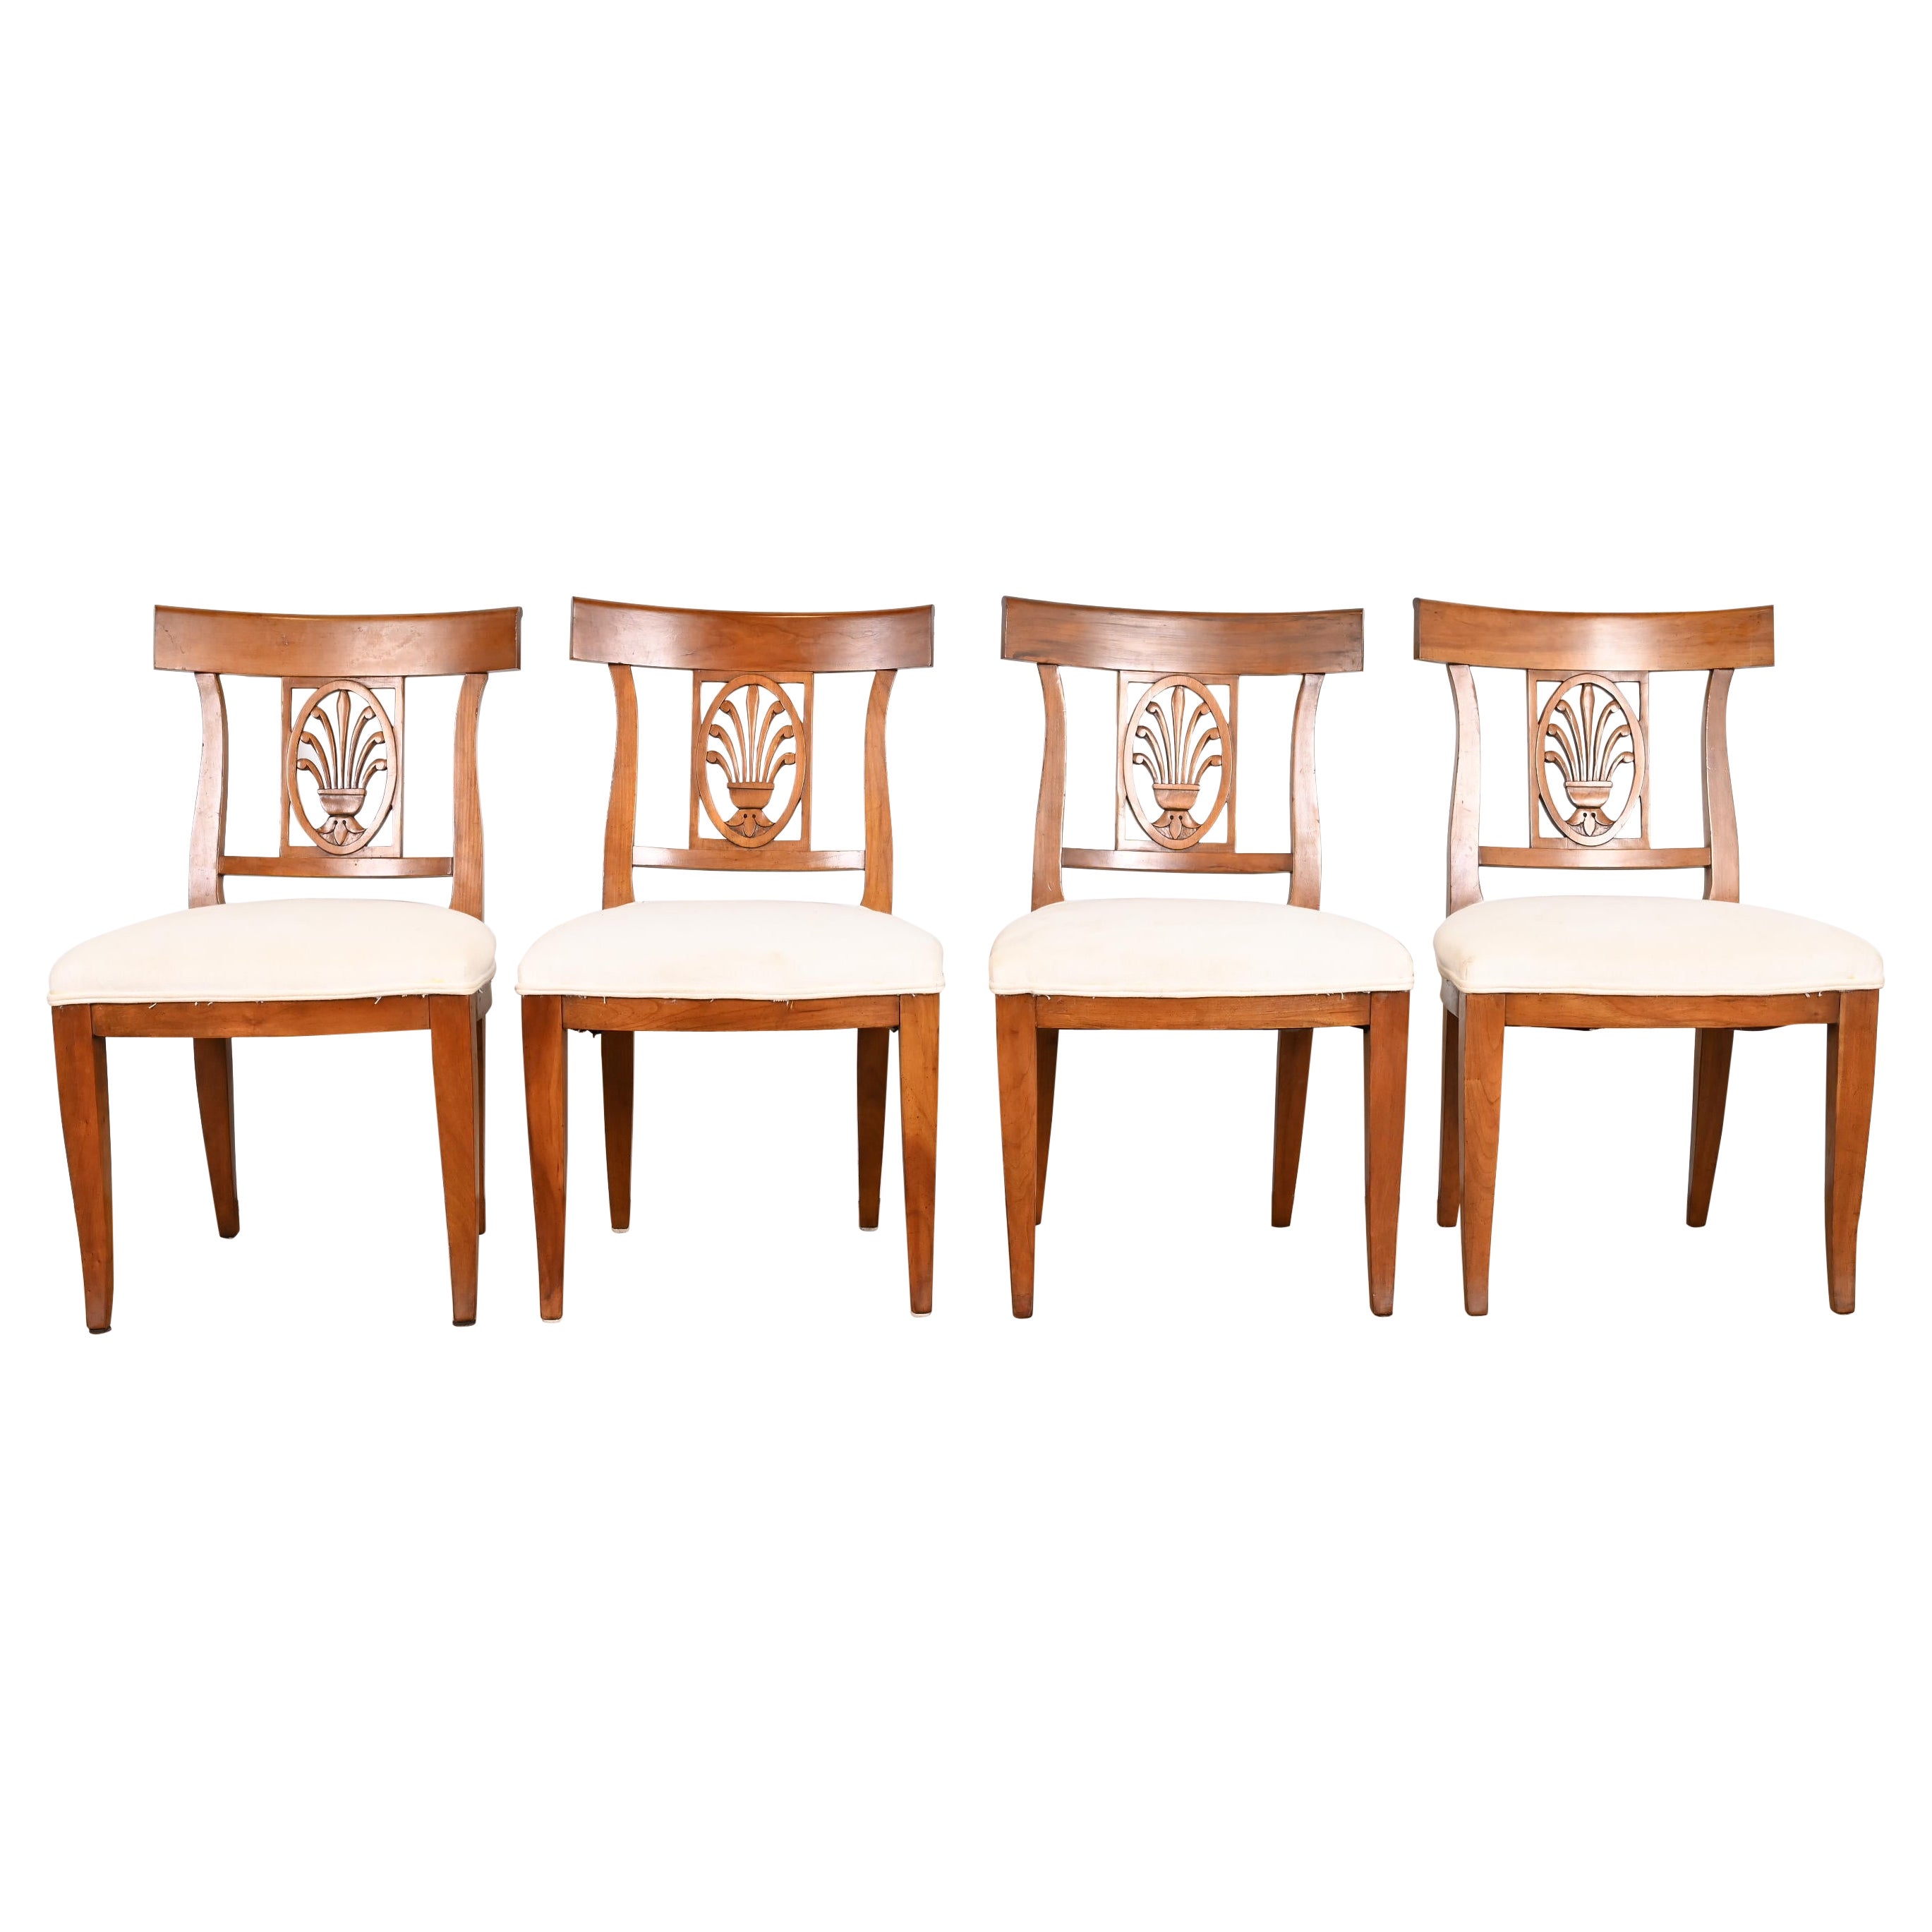 Kindel Furniture Regency Carved Fruitwood Dining Chairs, Set of Four